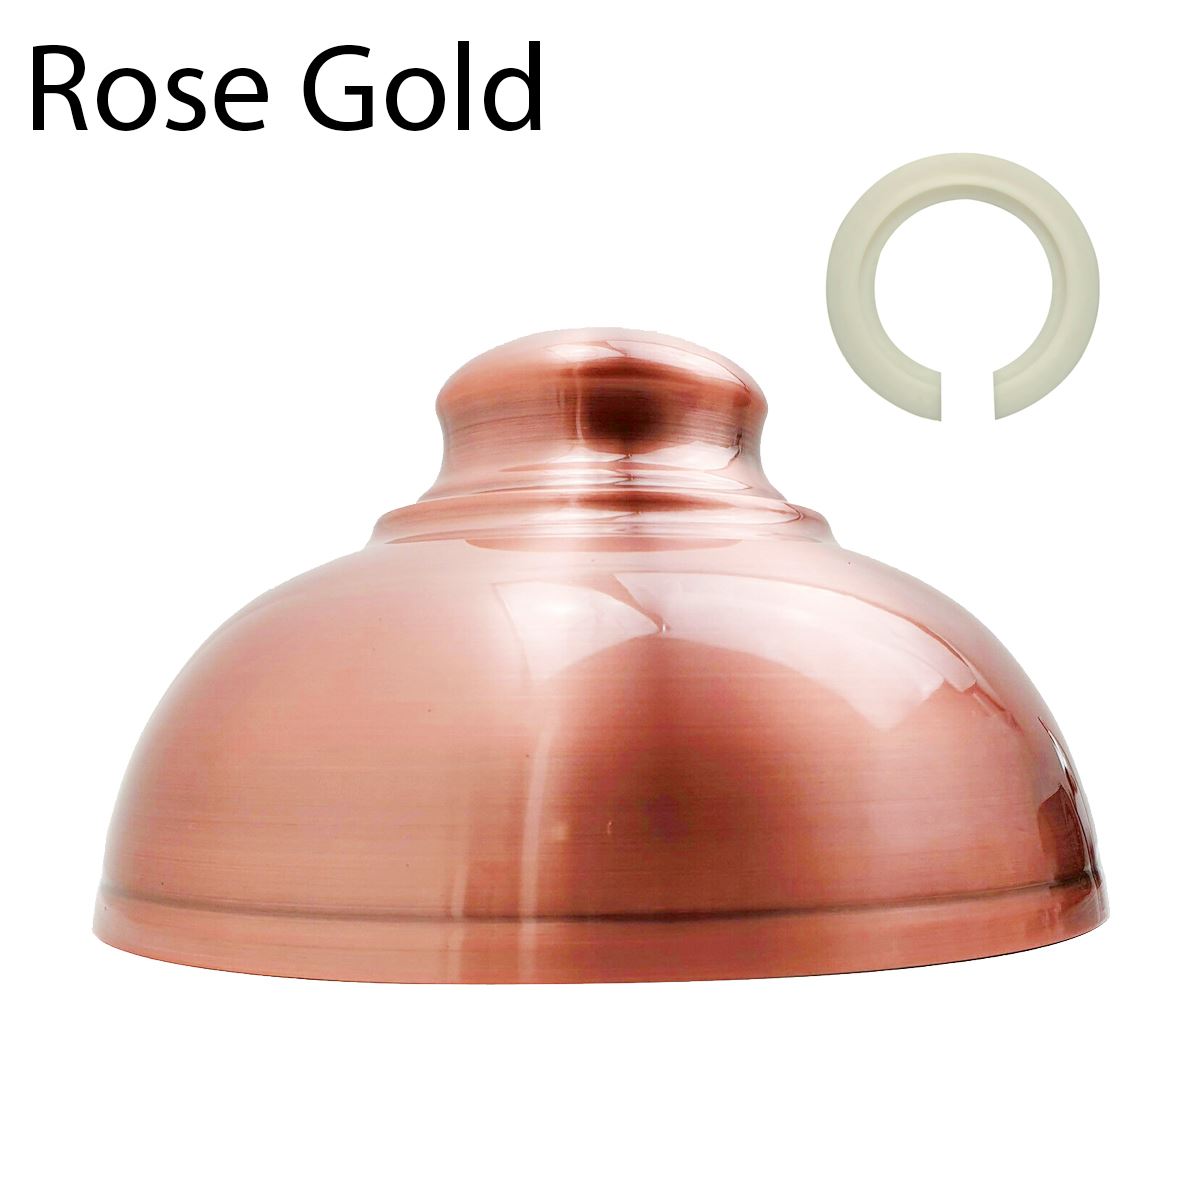 Rose gold metal light shade